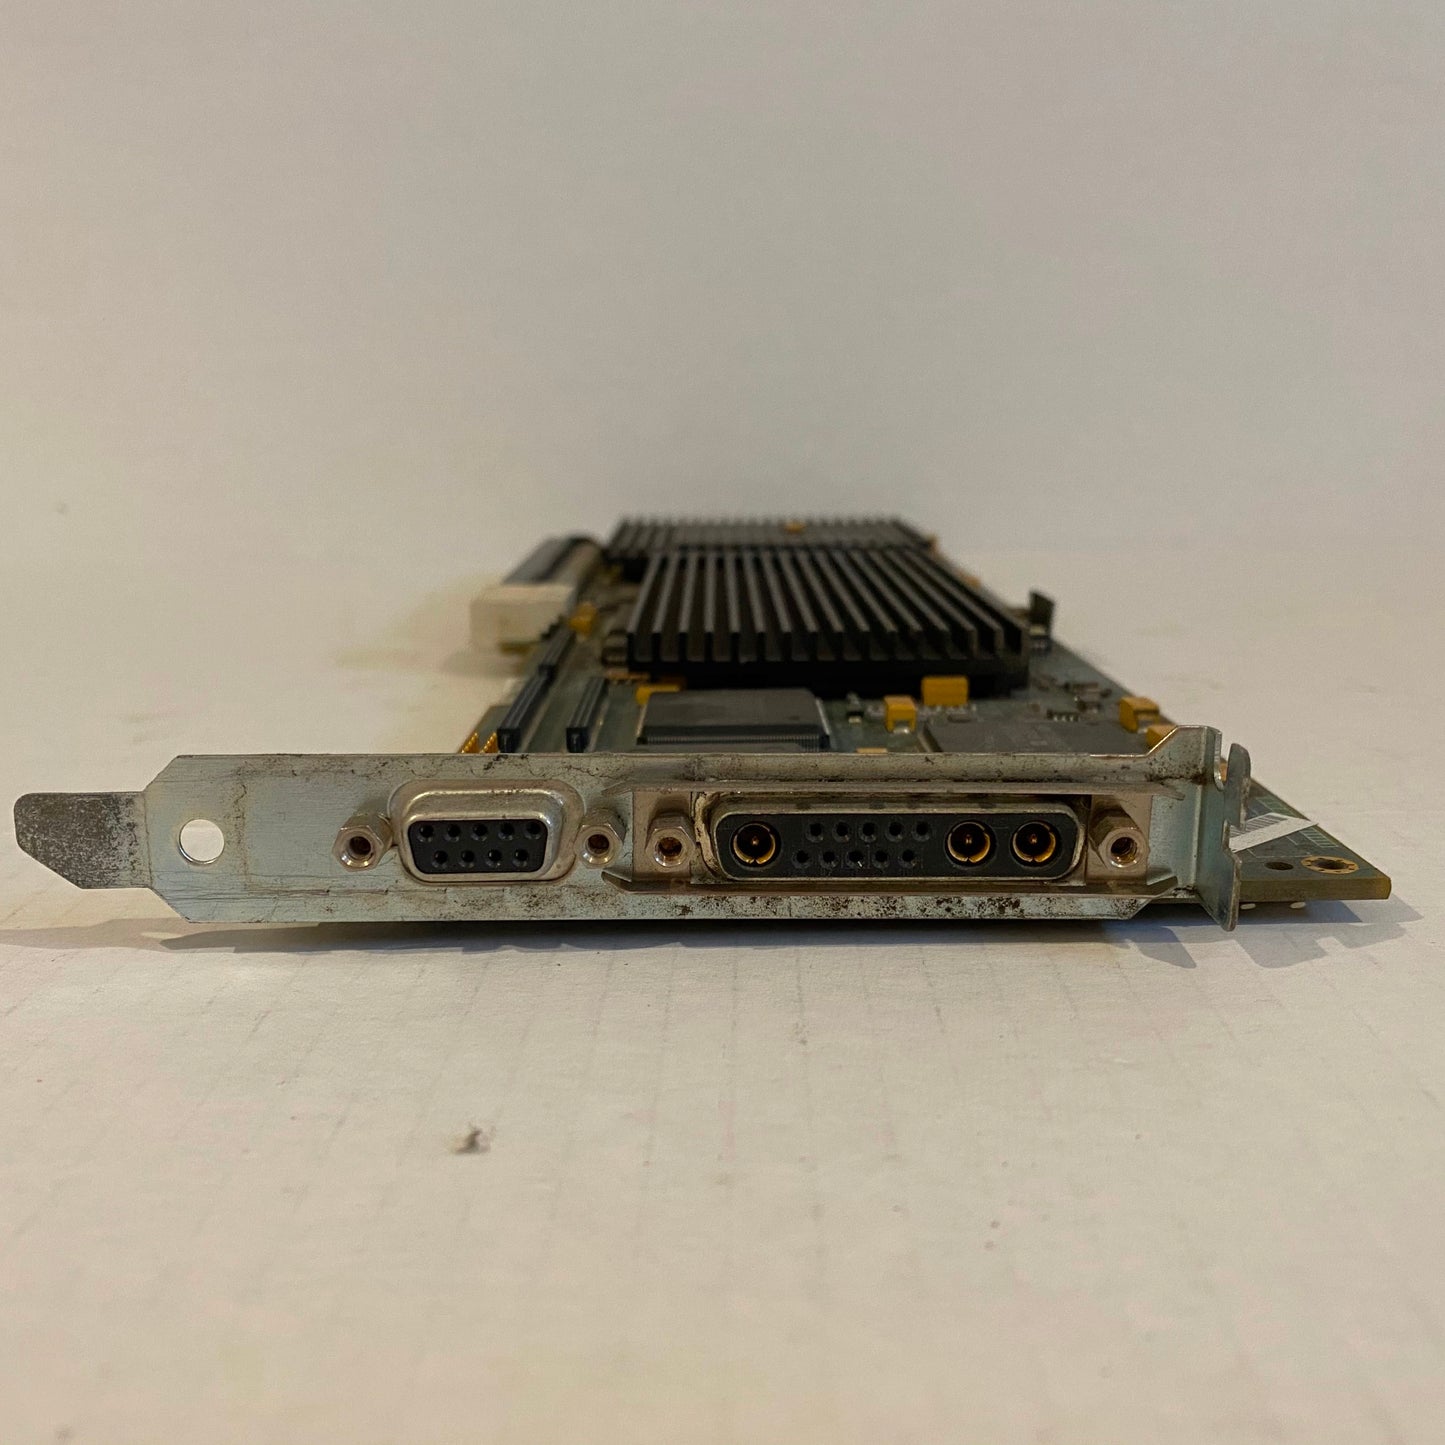 Parts or Repair SGi Silicon Graphics Indigo2 Video Card